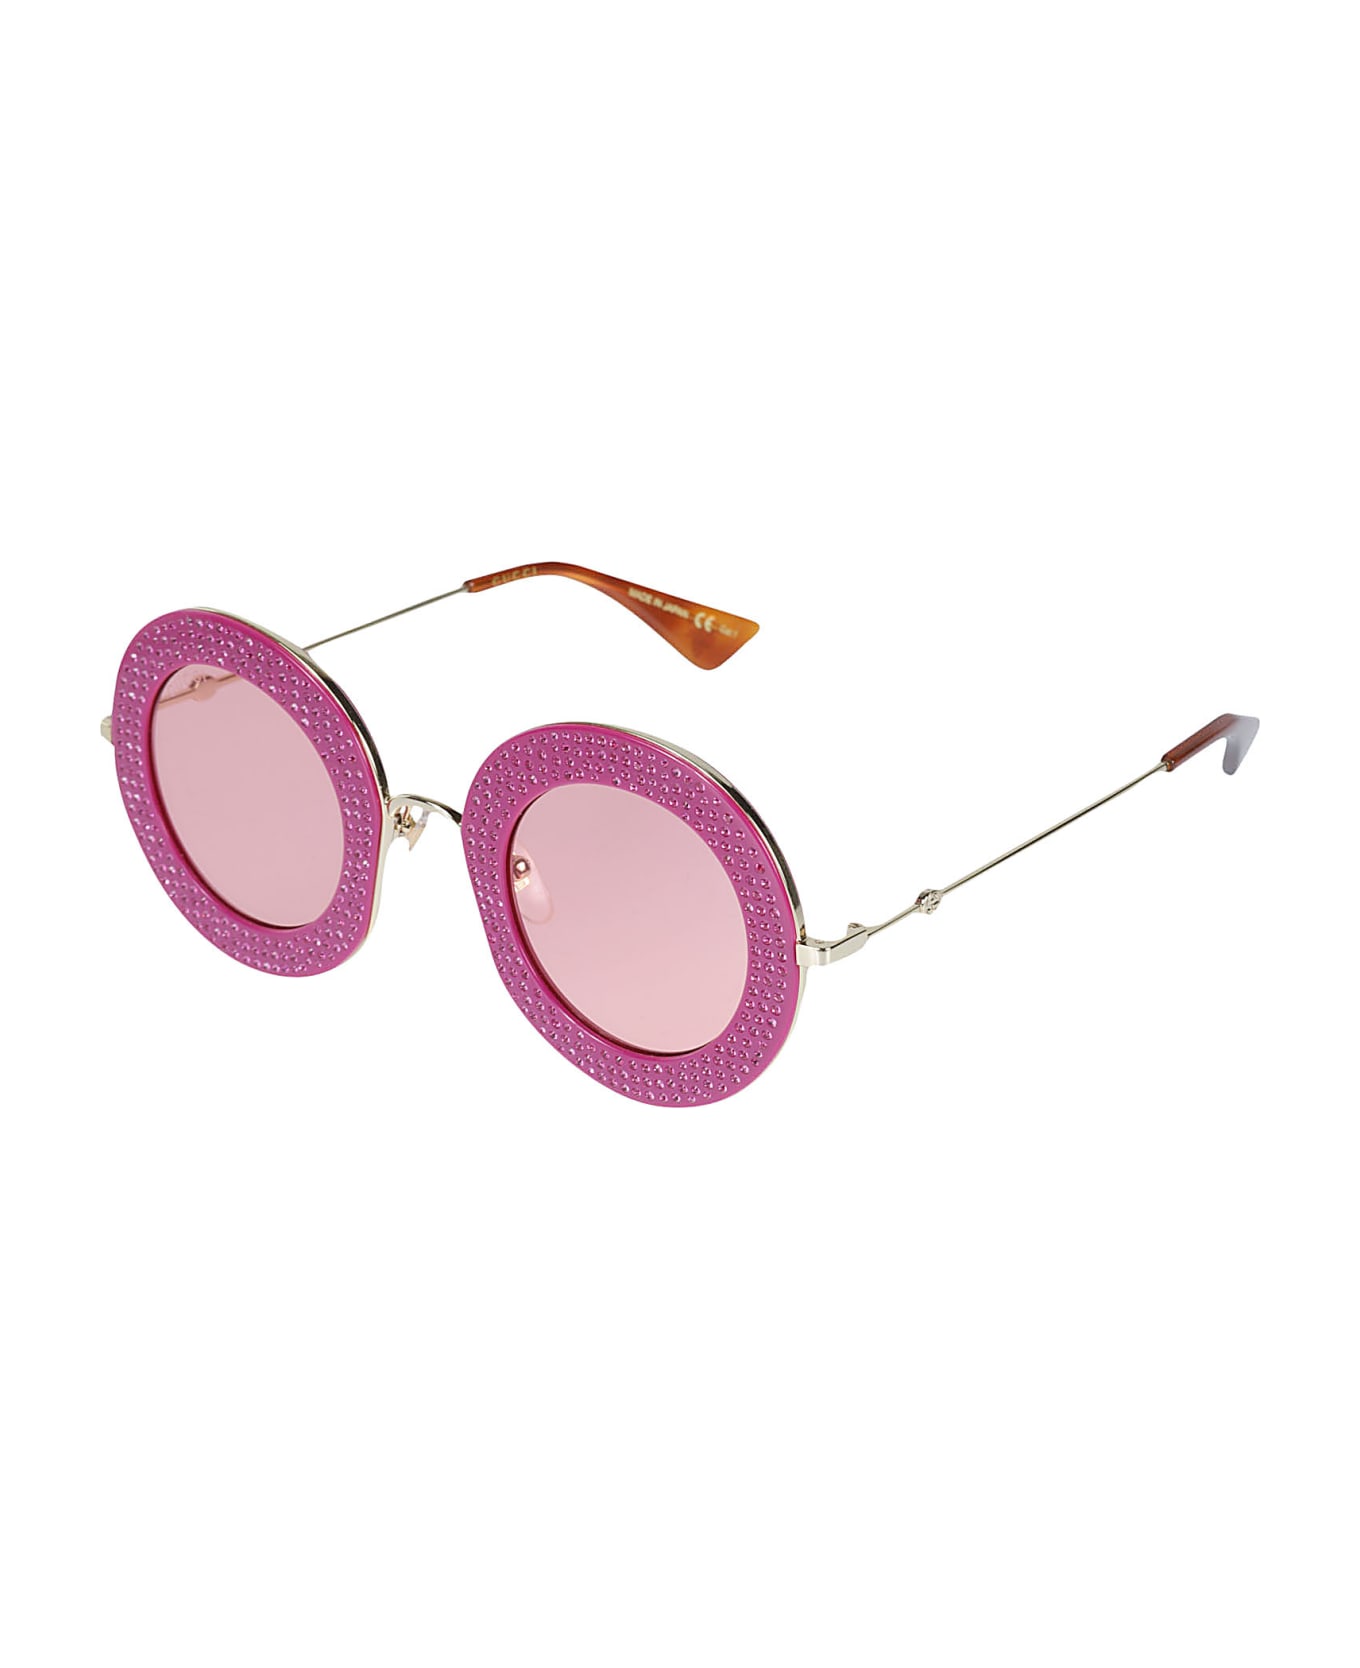 Gucci Eyewear Embellished Round Sunglasses - N/A